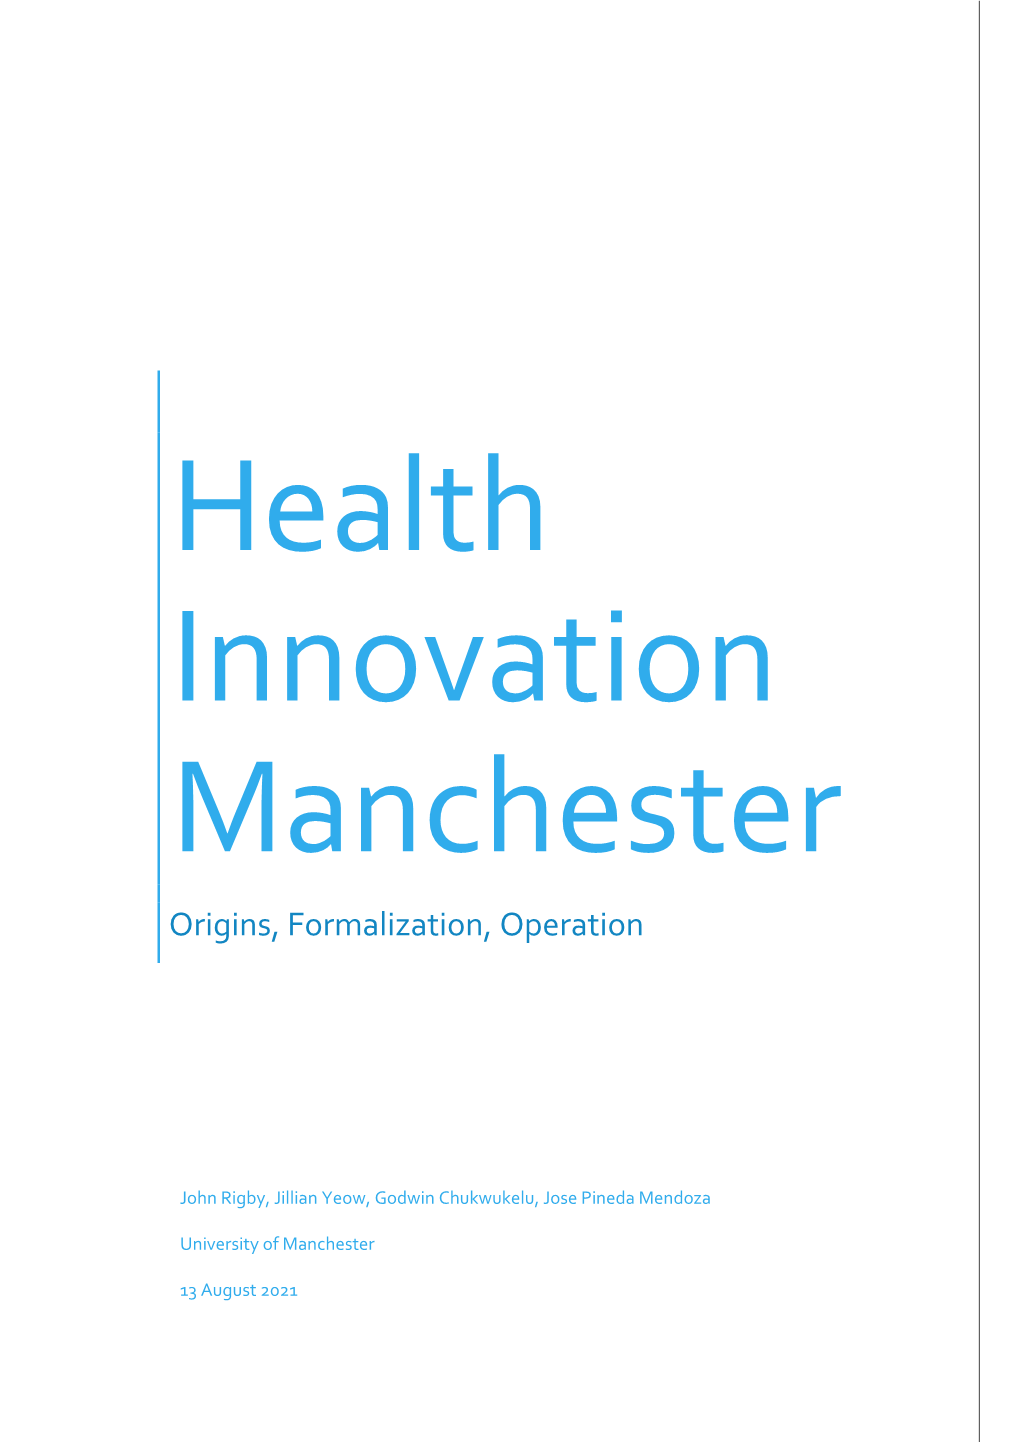 Health Innovation Manchester, Origins, Formalization, Operation